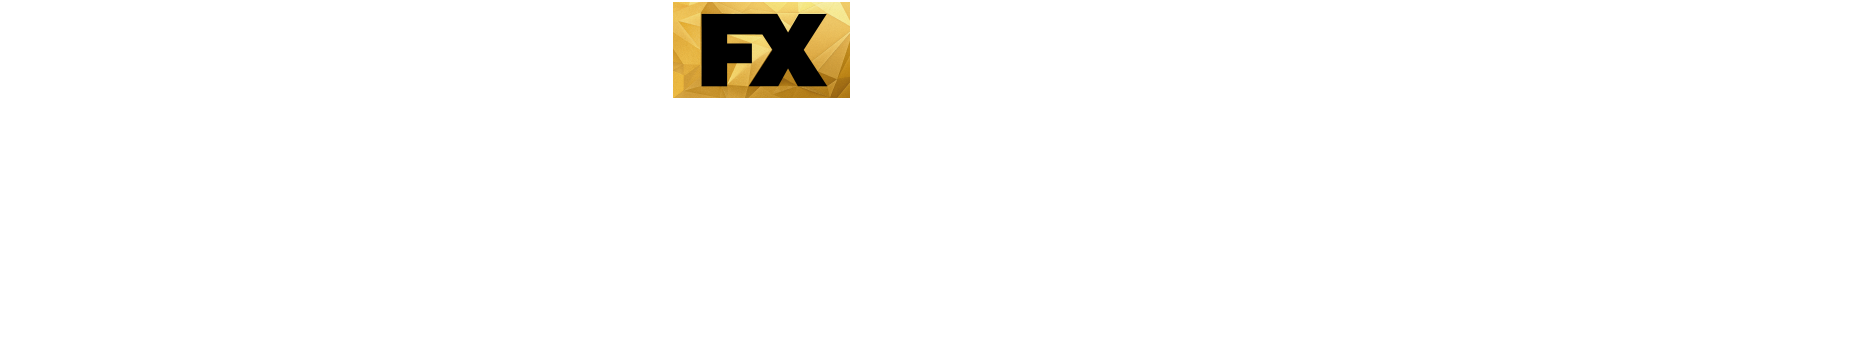 It's Always Sunny in Philadelphia Show Logo